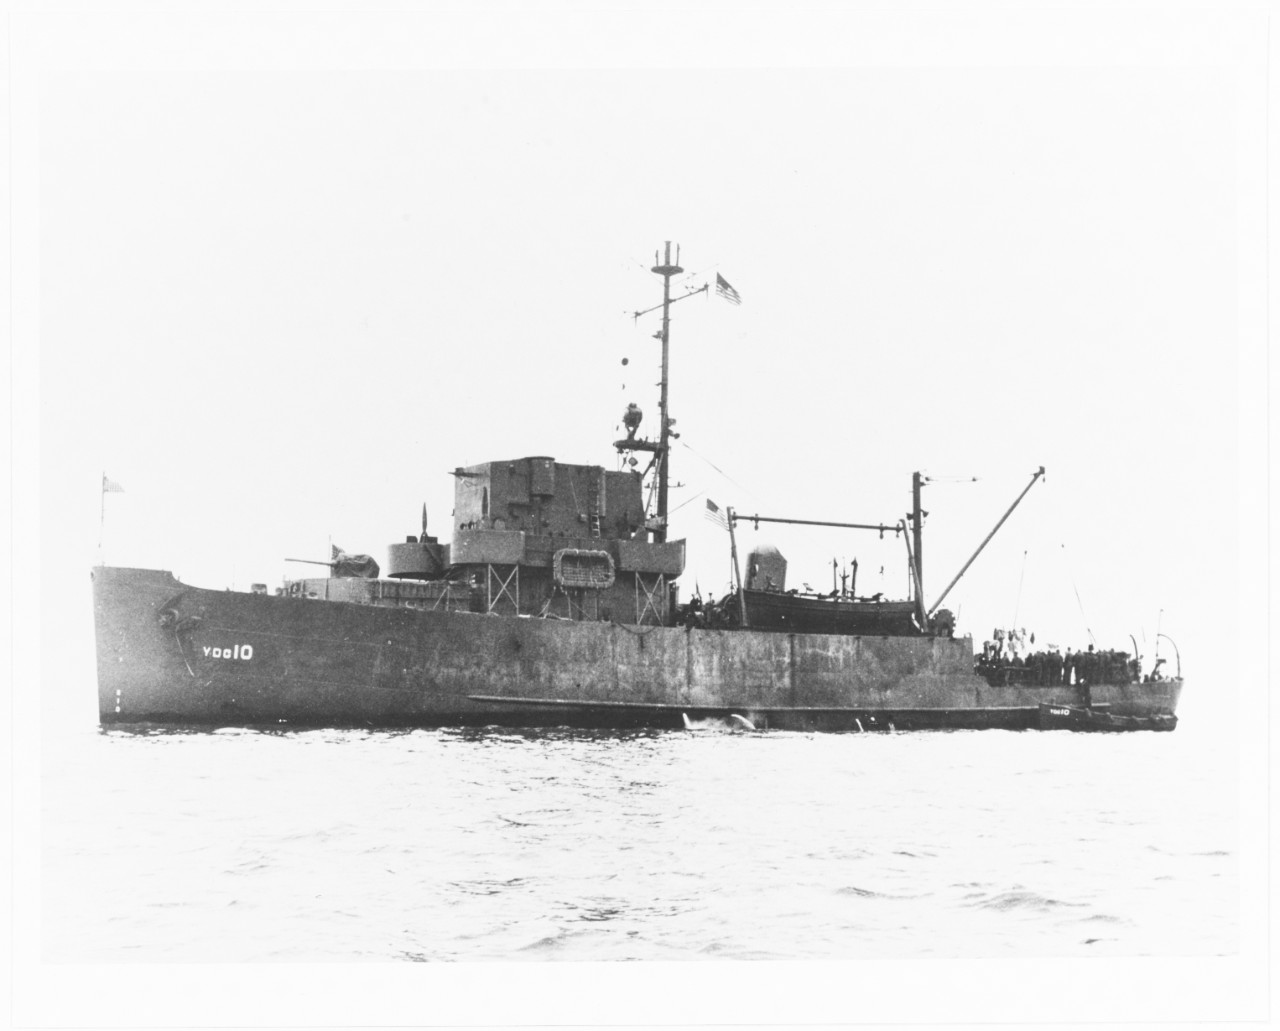 USS YDG-10